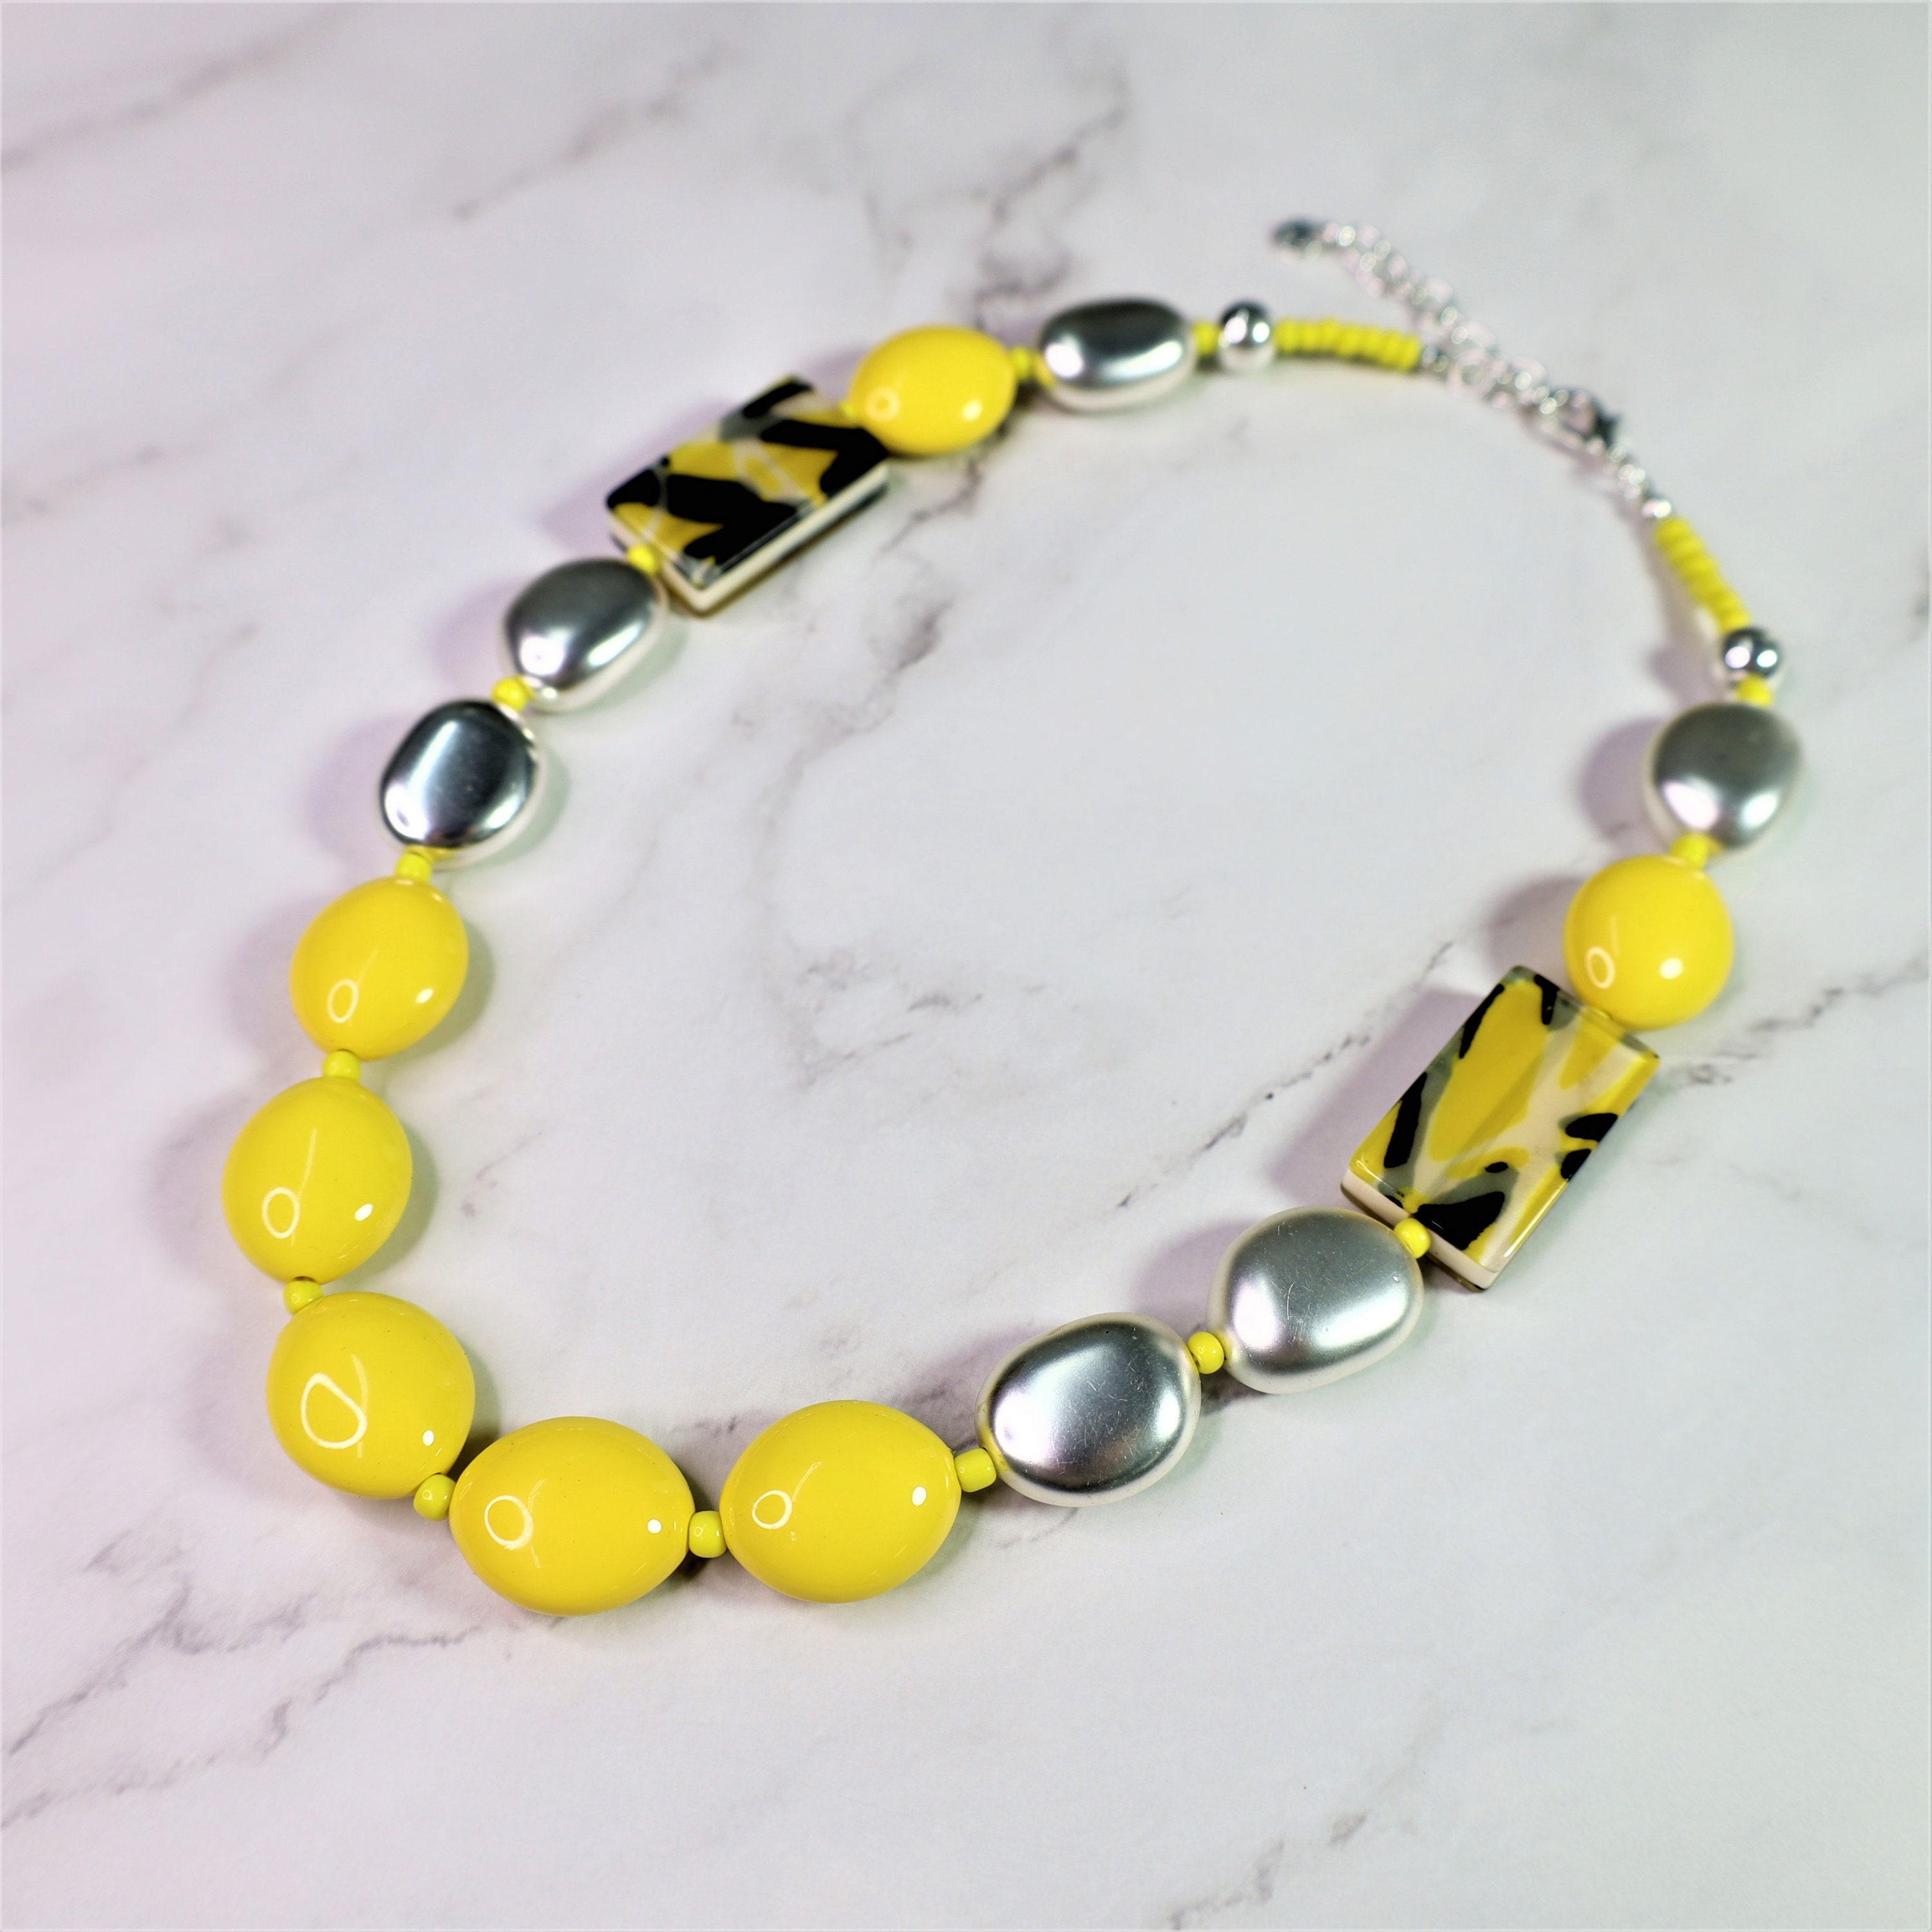 Big Yellow Clay Beads,2 Big Yellow Pebble Beads,golden Clay Beads